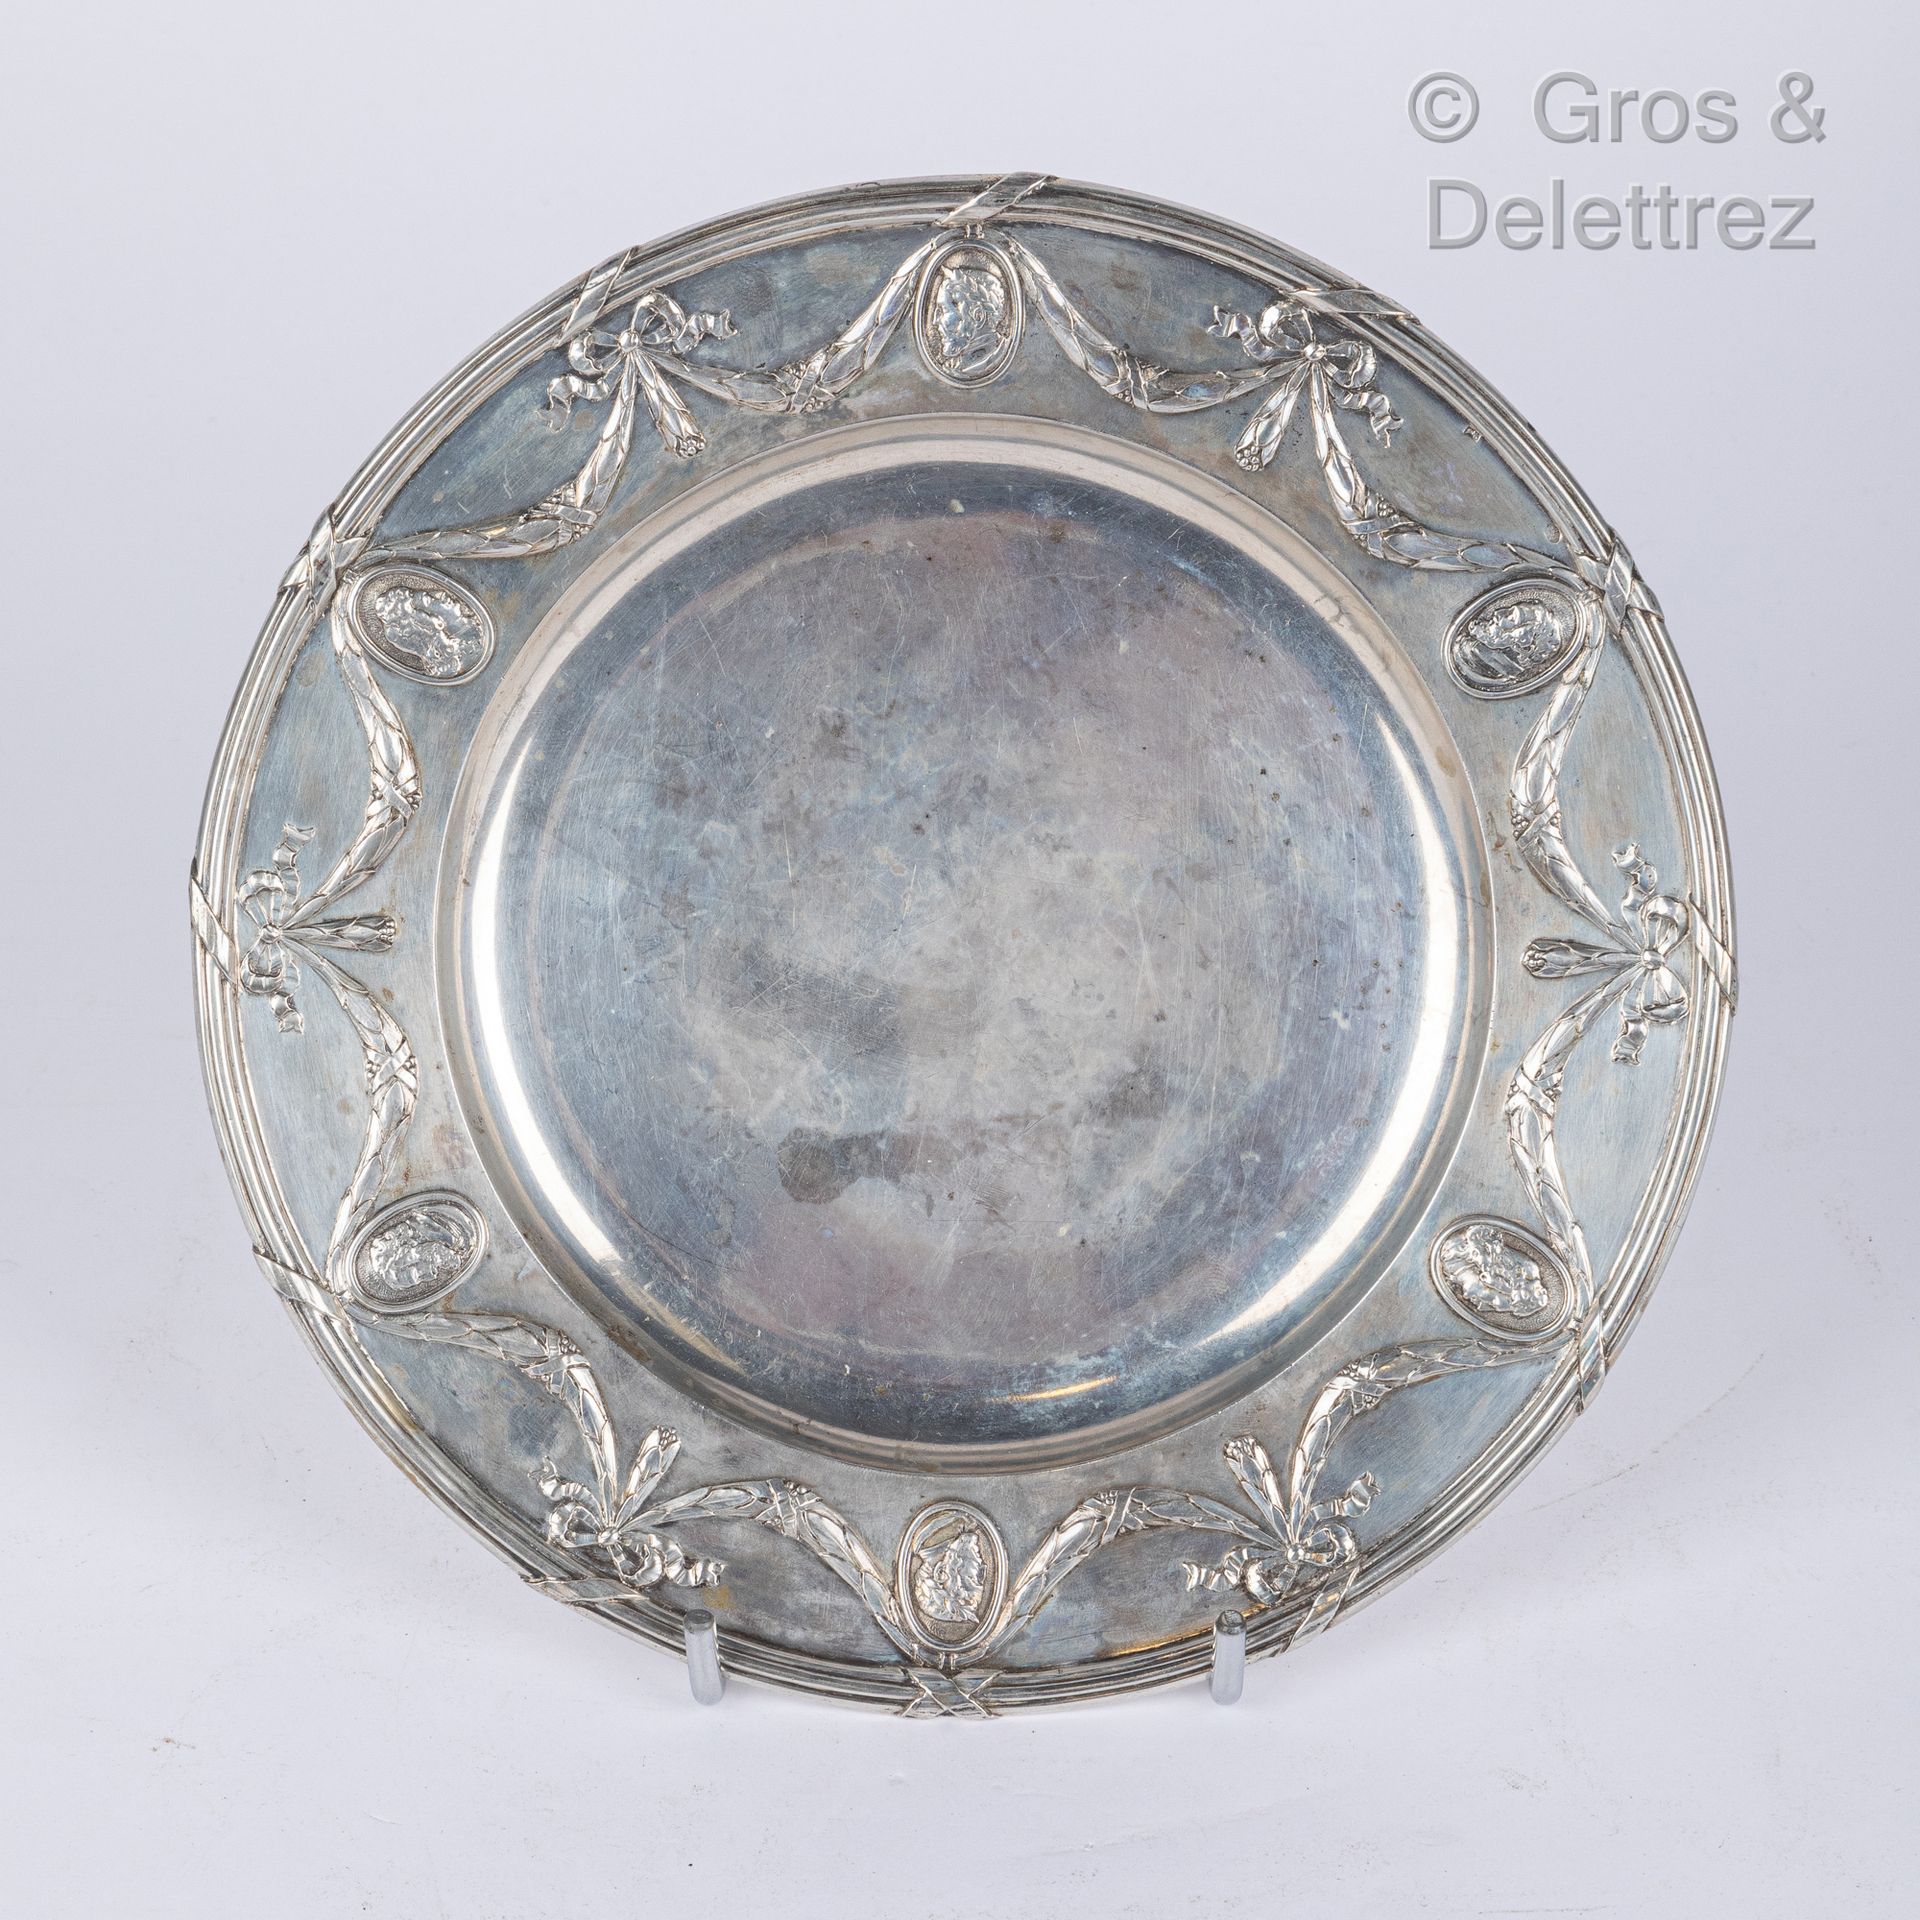 Null 银盘，Marli上装饰有名人简介的奖章、花环和蝴蝶结。

哈瑙（？），19世纪末

直径：24厘米

重量：390克